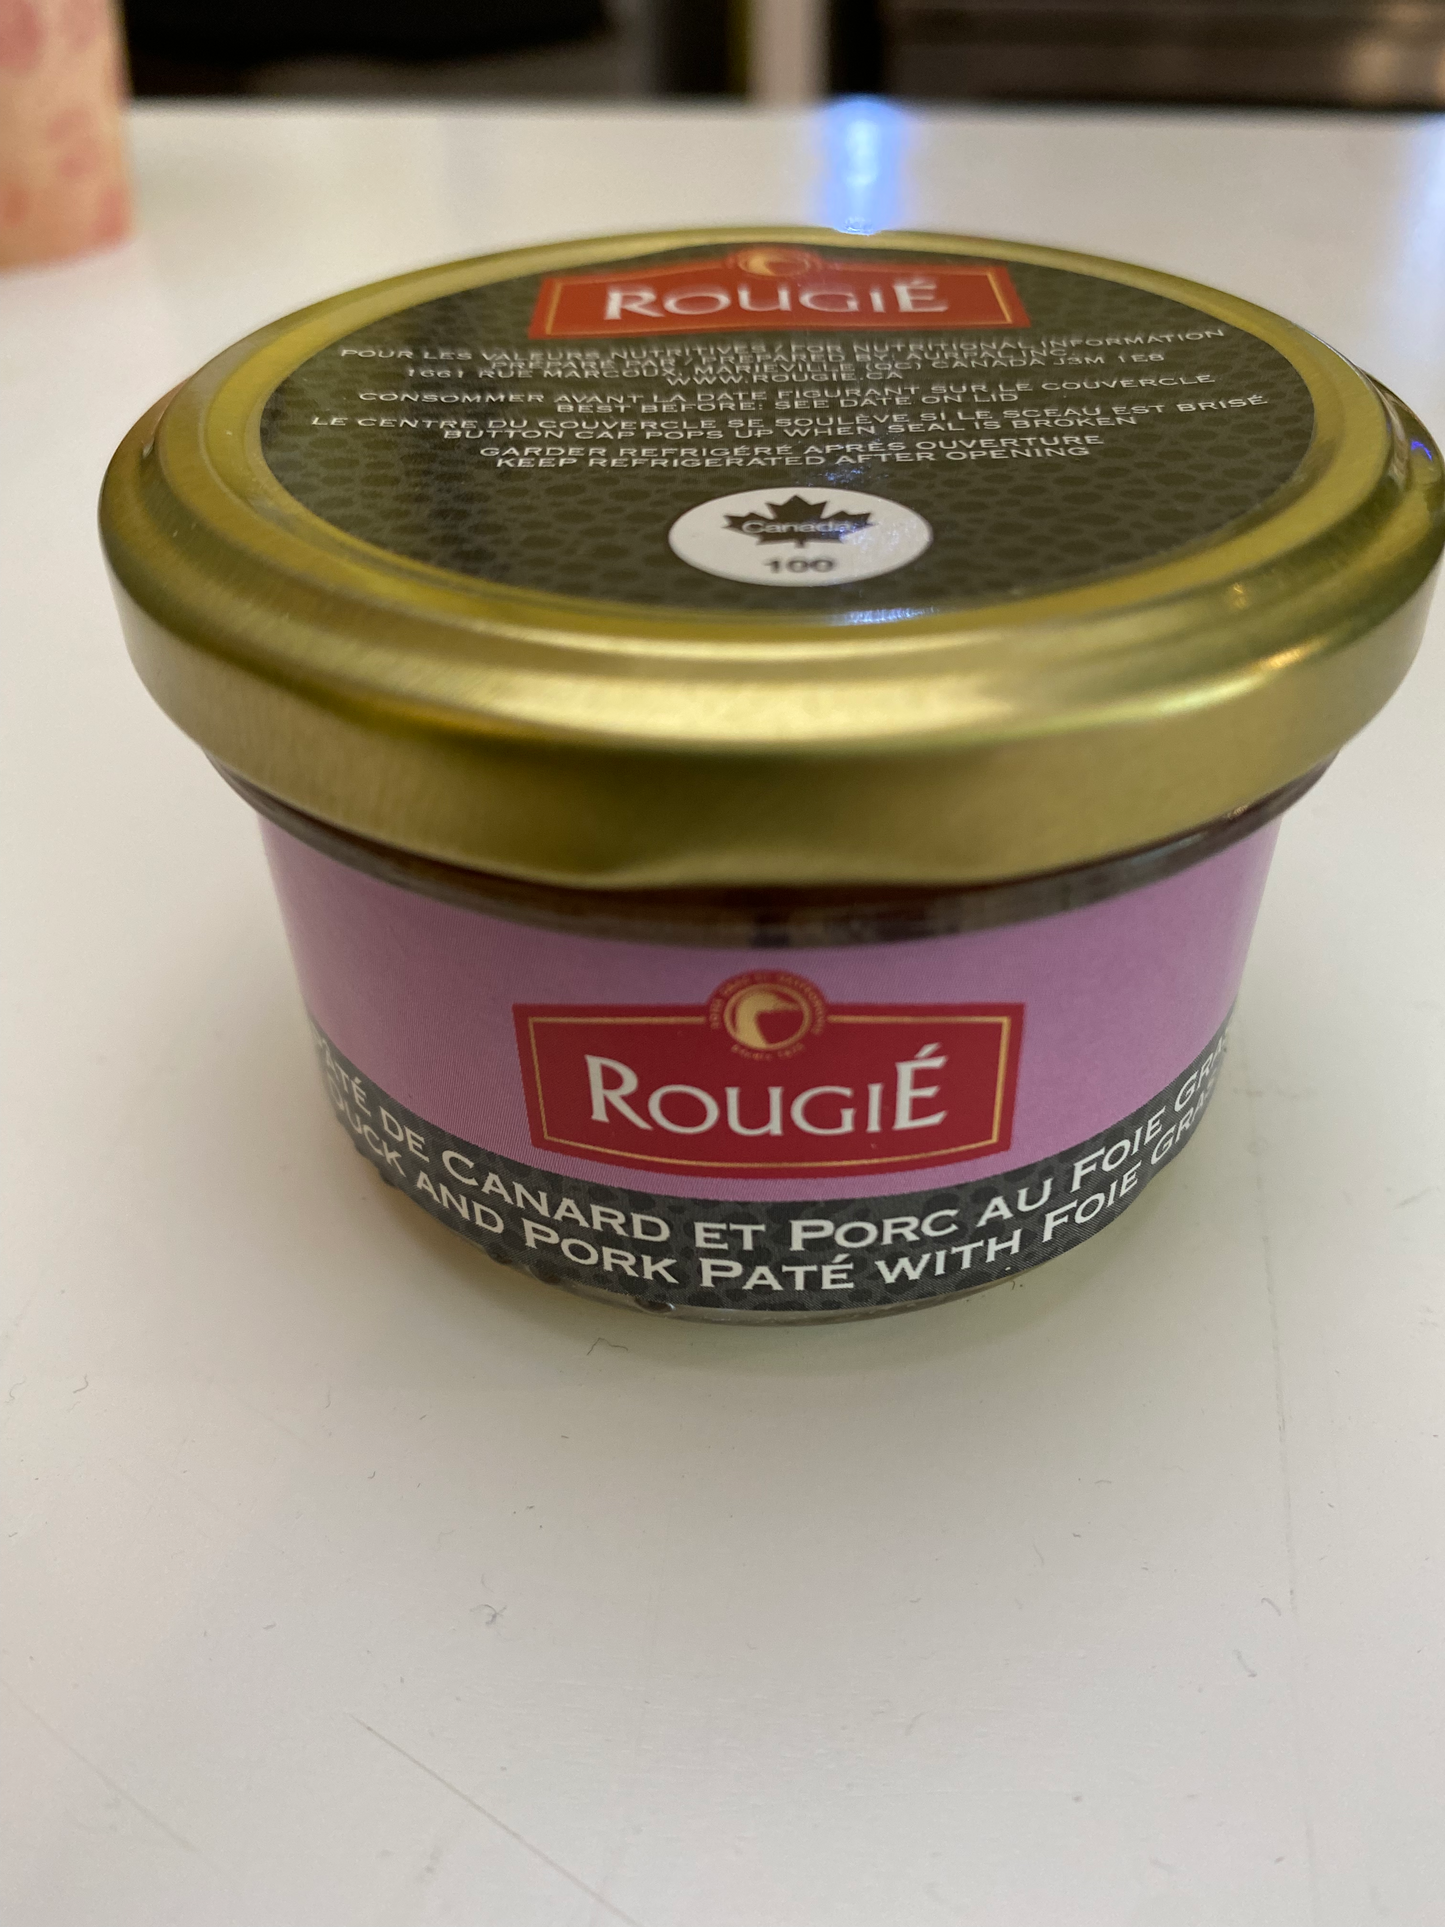 Rougie Pork foie gras